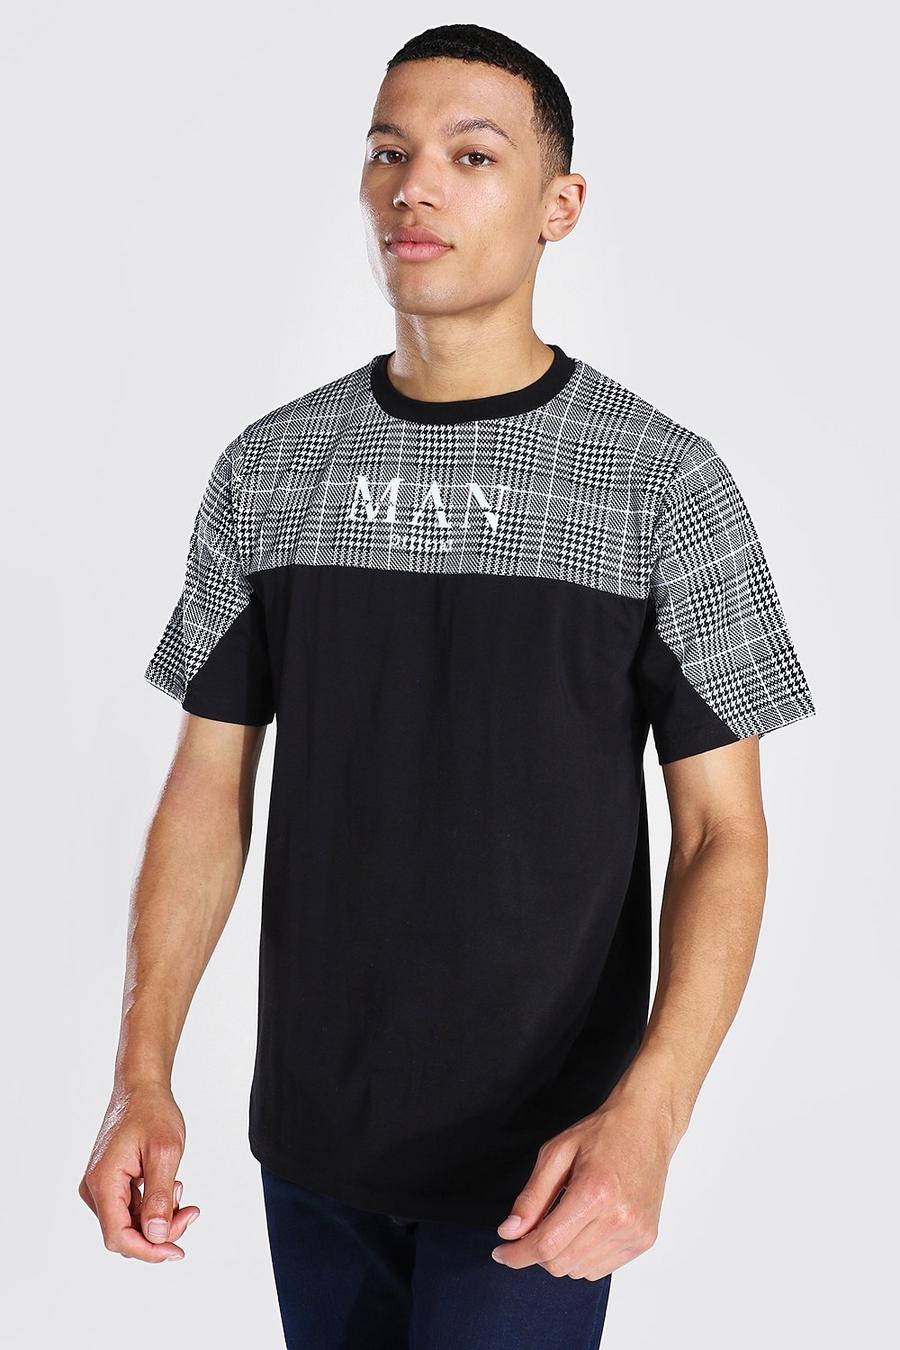 Camiseta Tall MAN de tela jacquard ajustada al músculo, Black image number 1